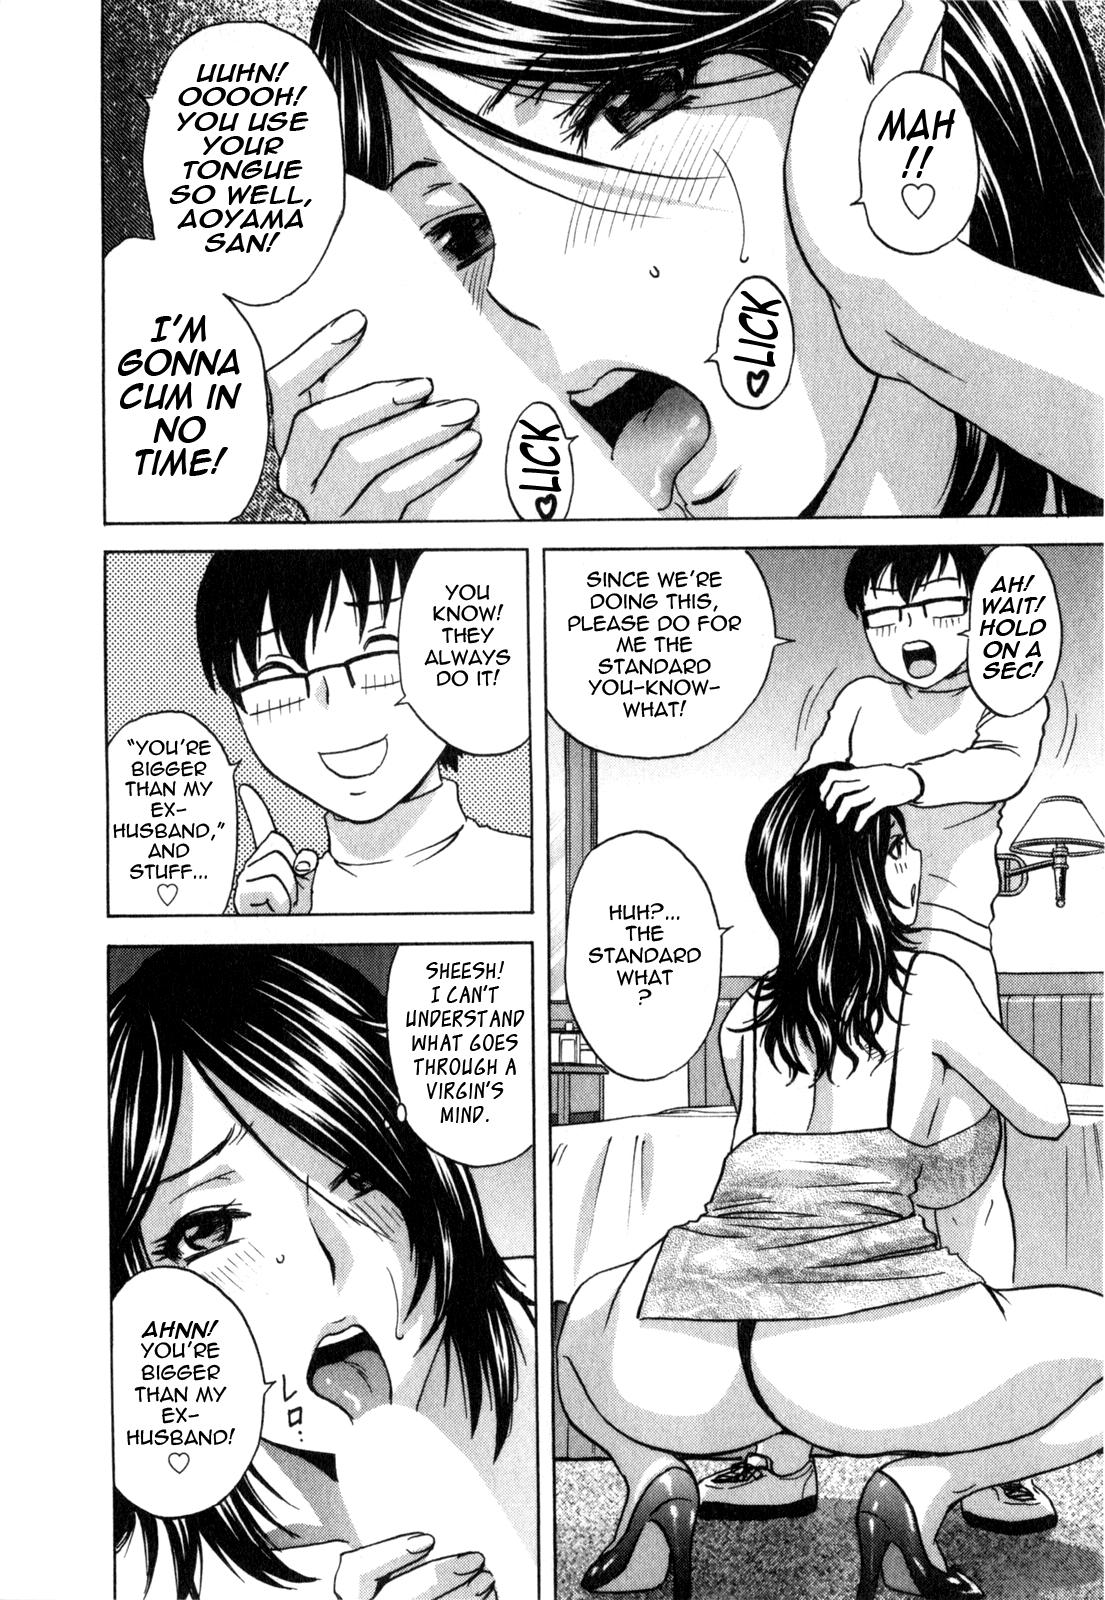 Life with Married Women Just Like a Manga 3 53